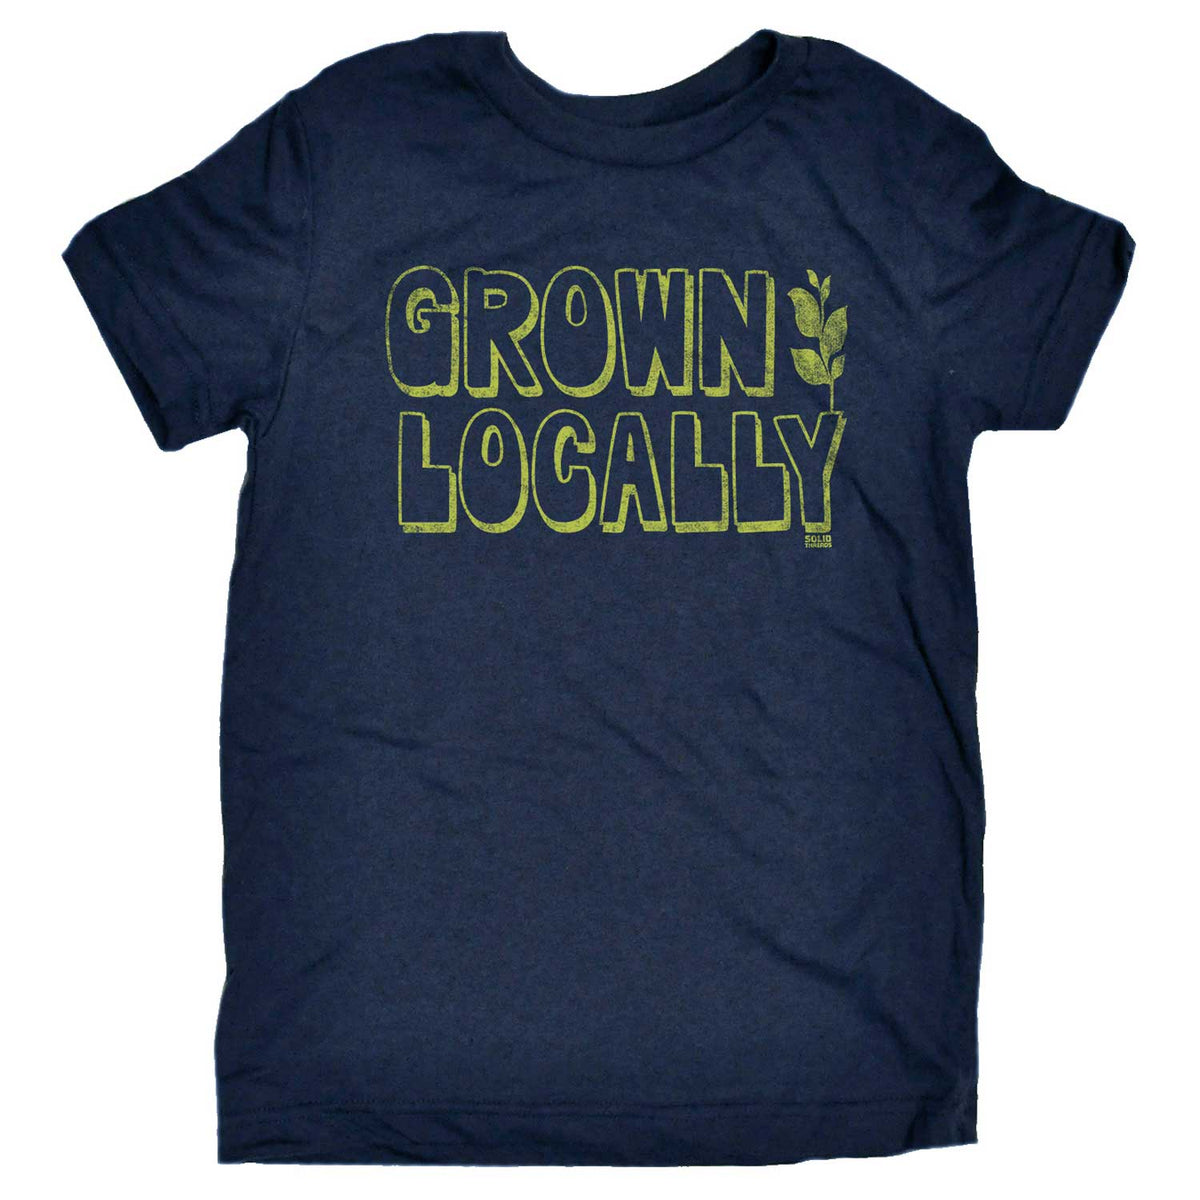 Kids Grown Locally Cool Organic Farming Graphic T-Shirt | Retro Farm to Table Tee | Solid Threads